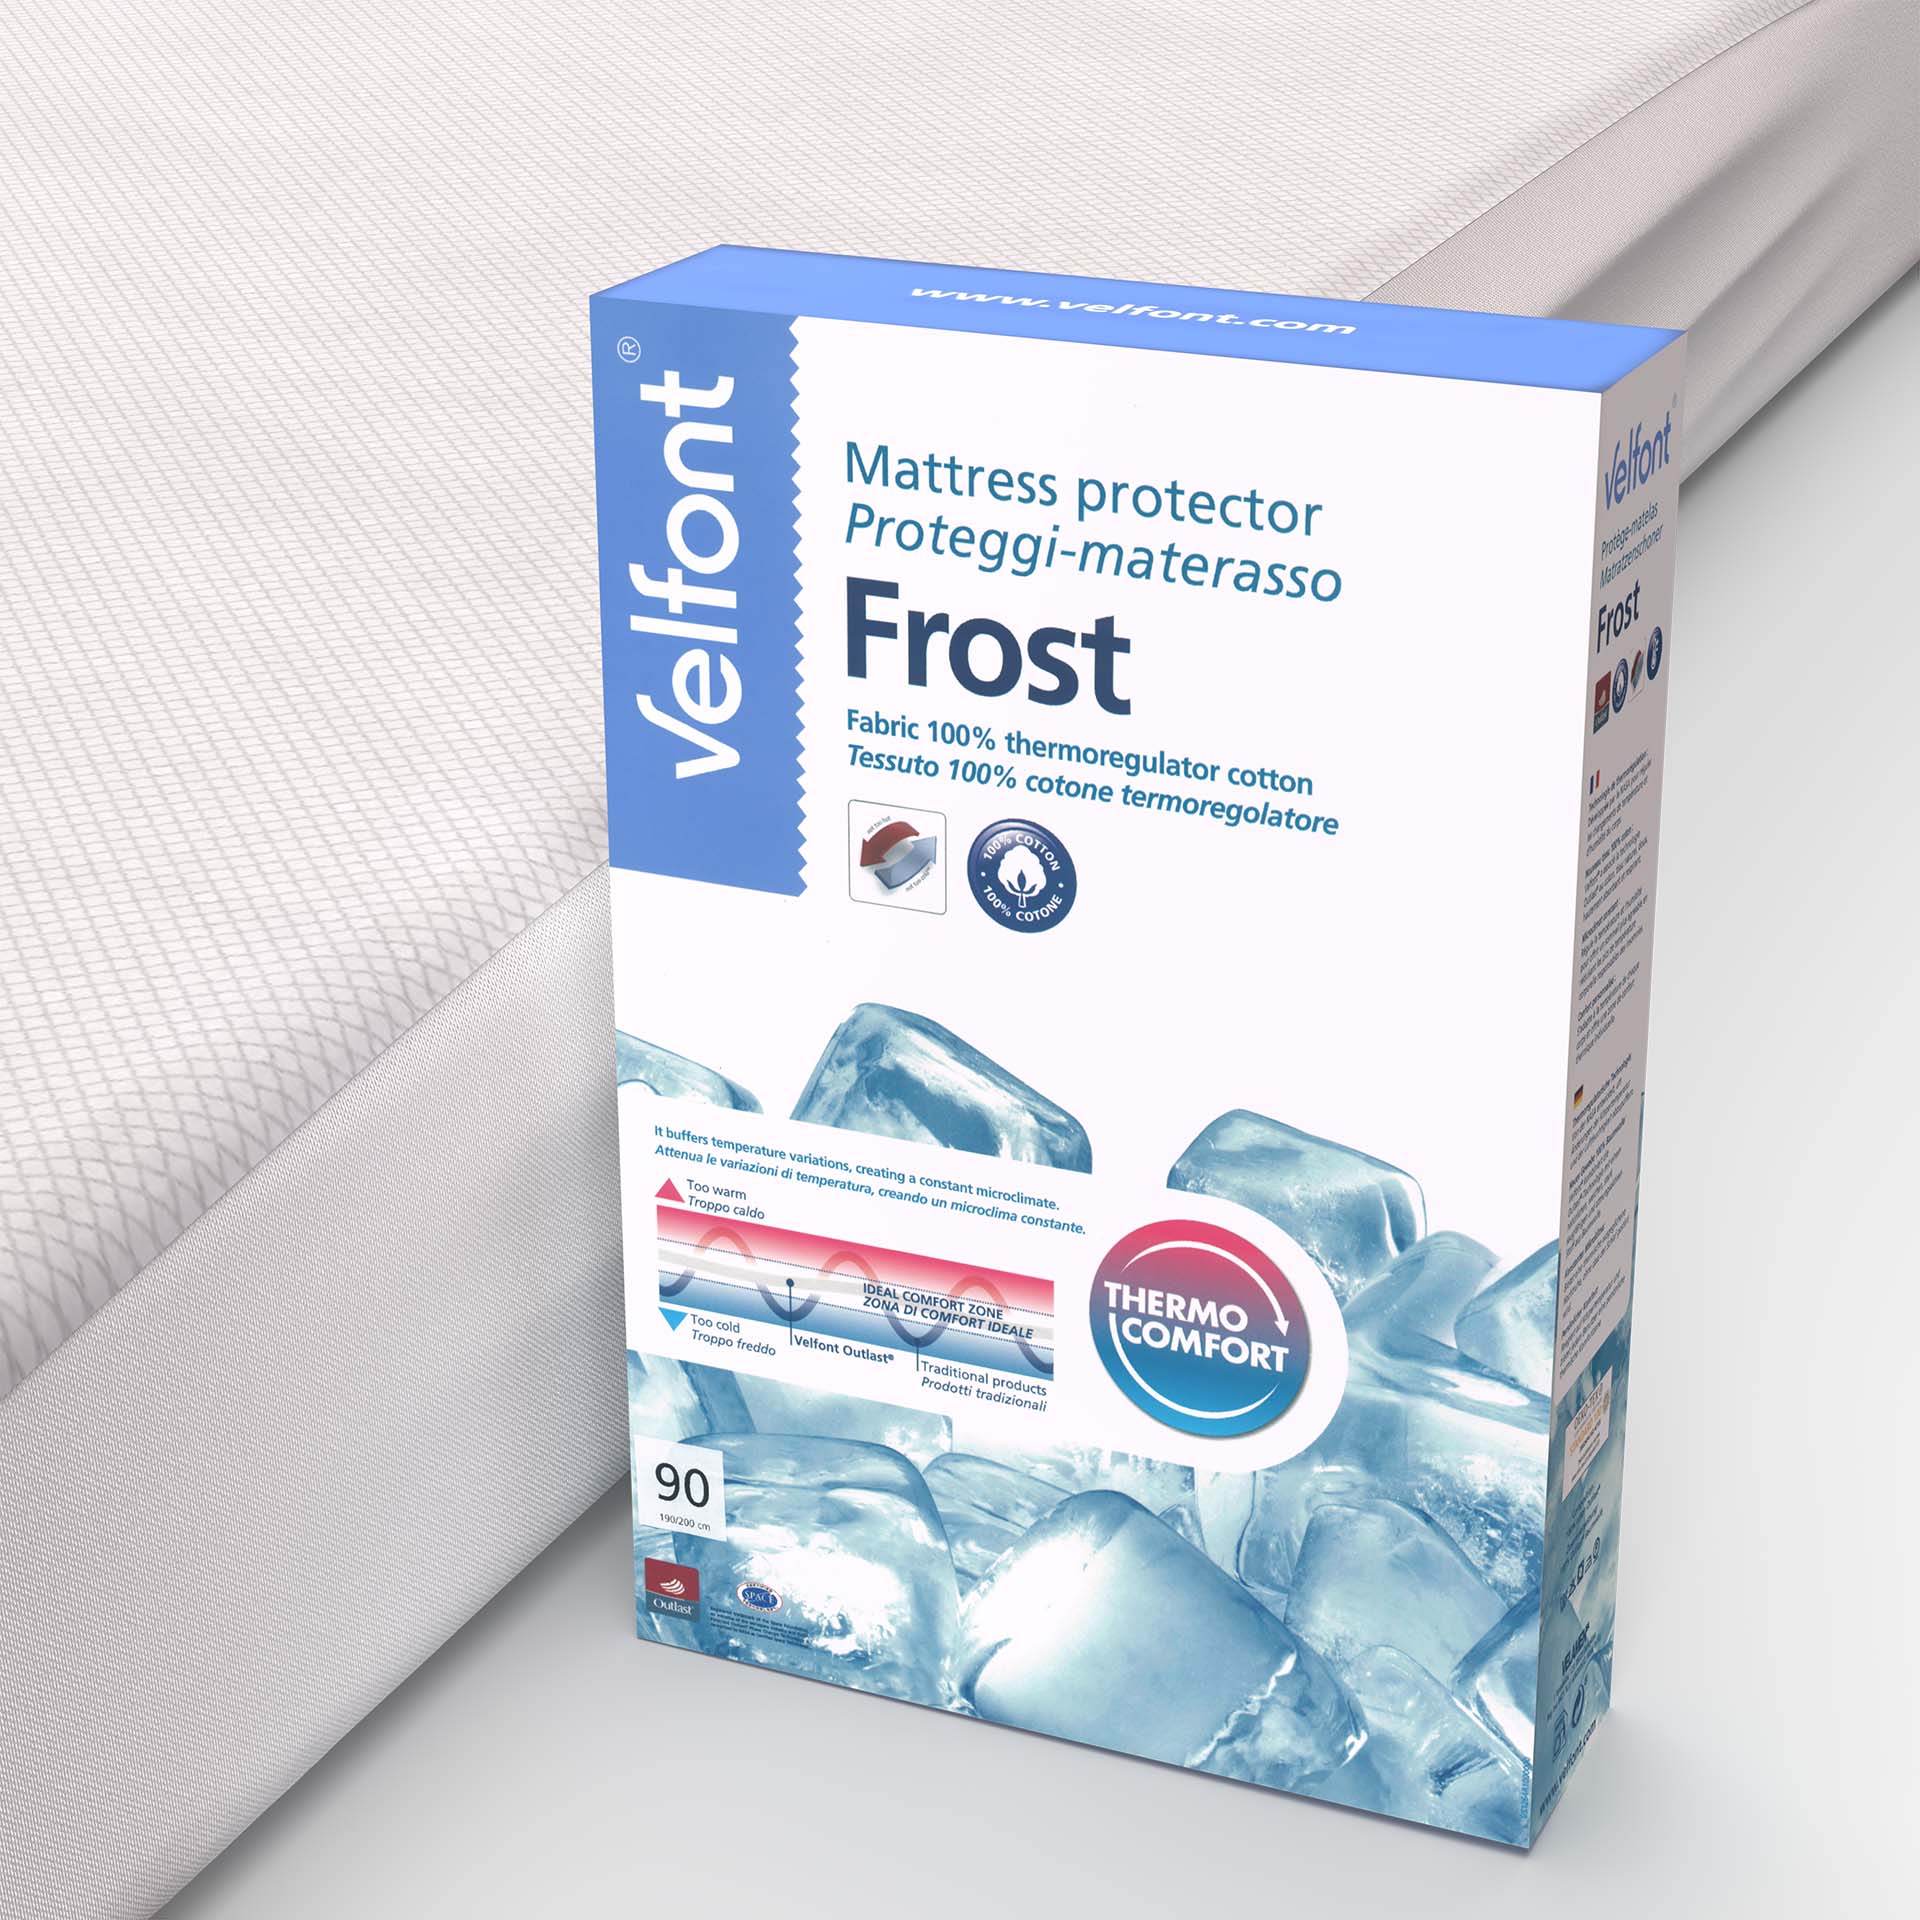 Velfont Frost protège-matelas thermorégulateur / Outlast